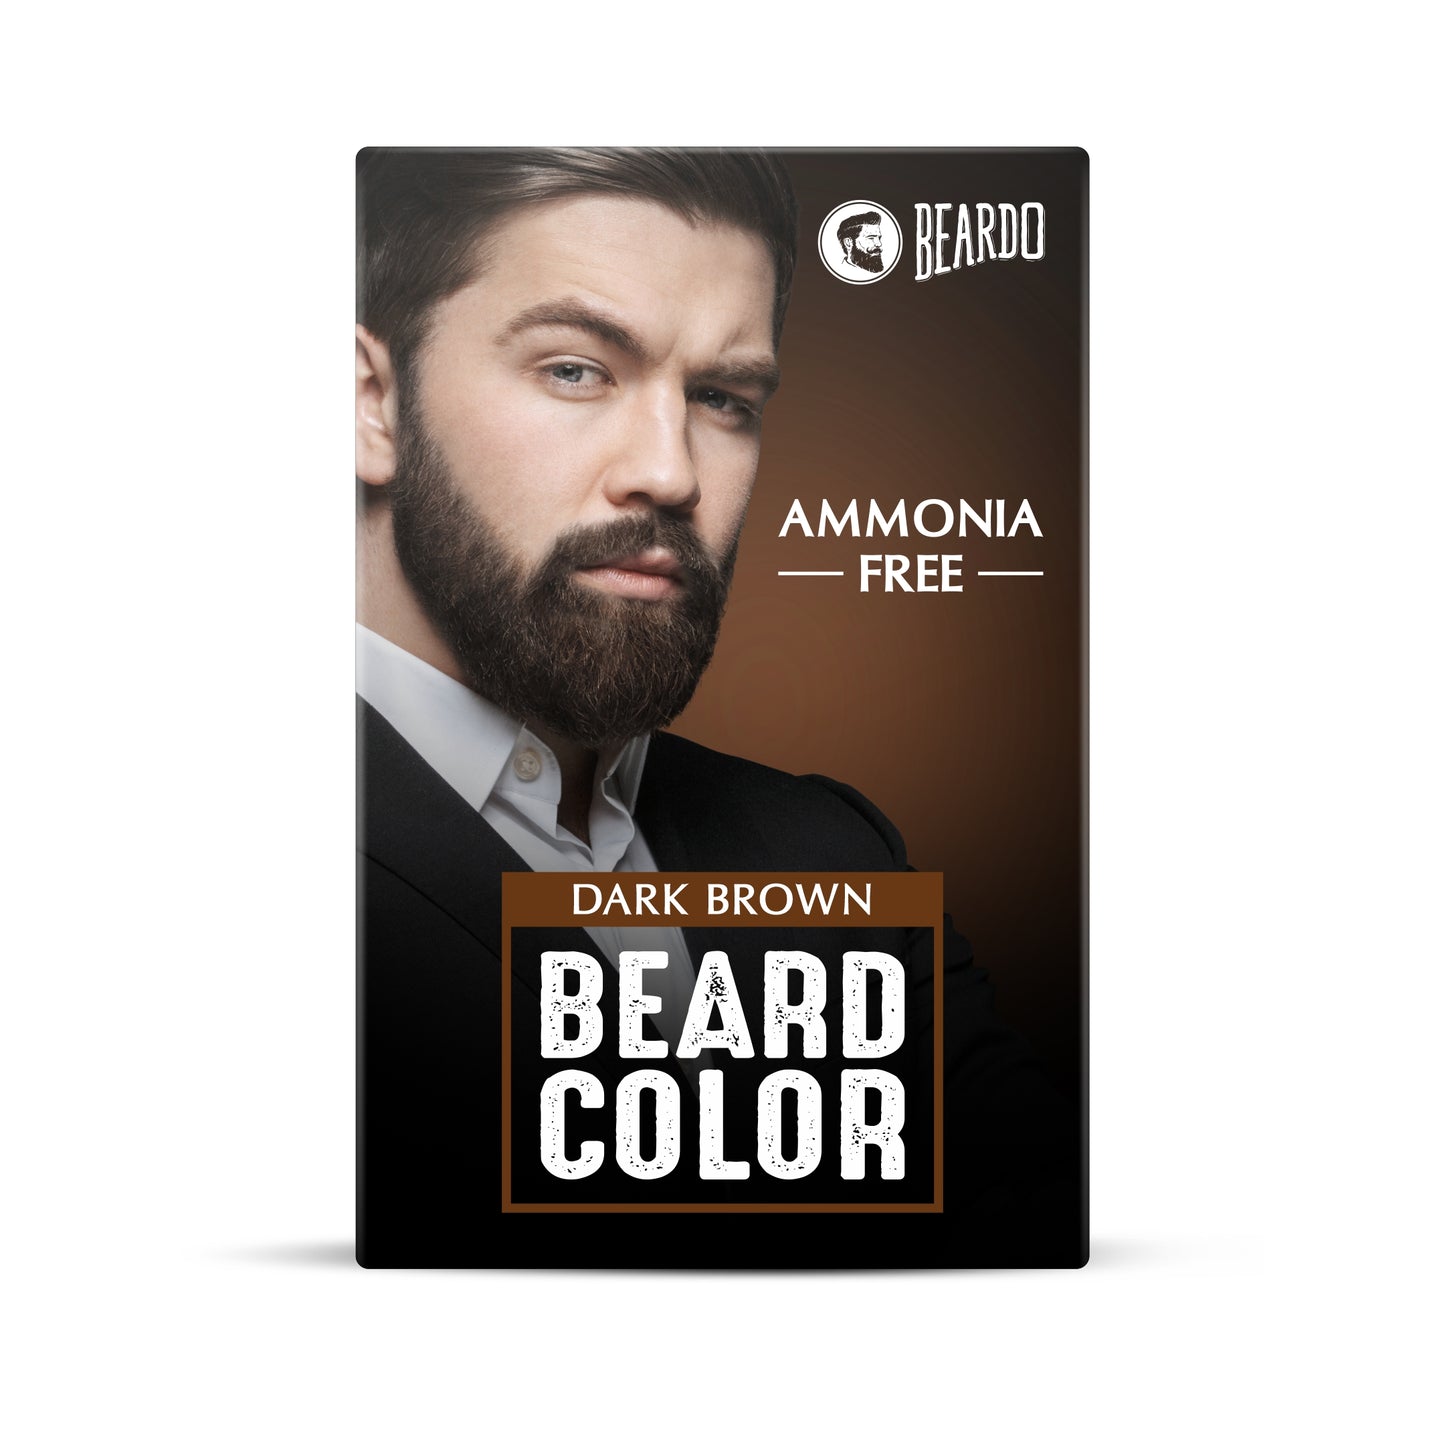 Beardo Beard Color Dark Brown